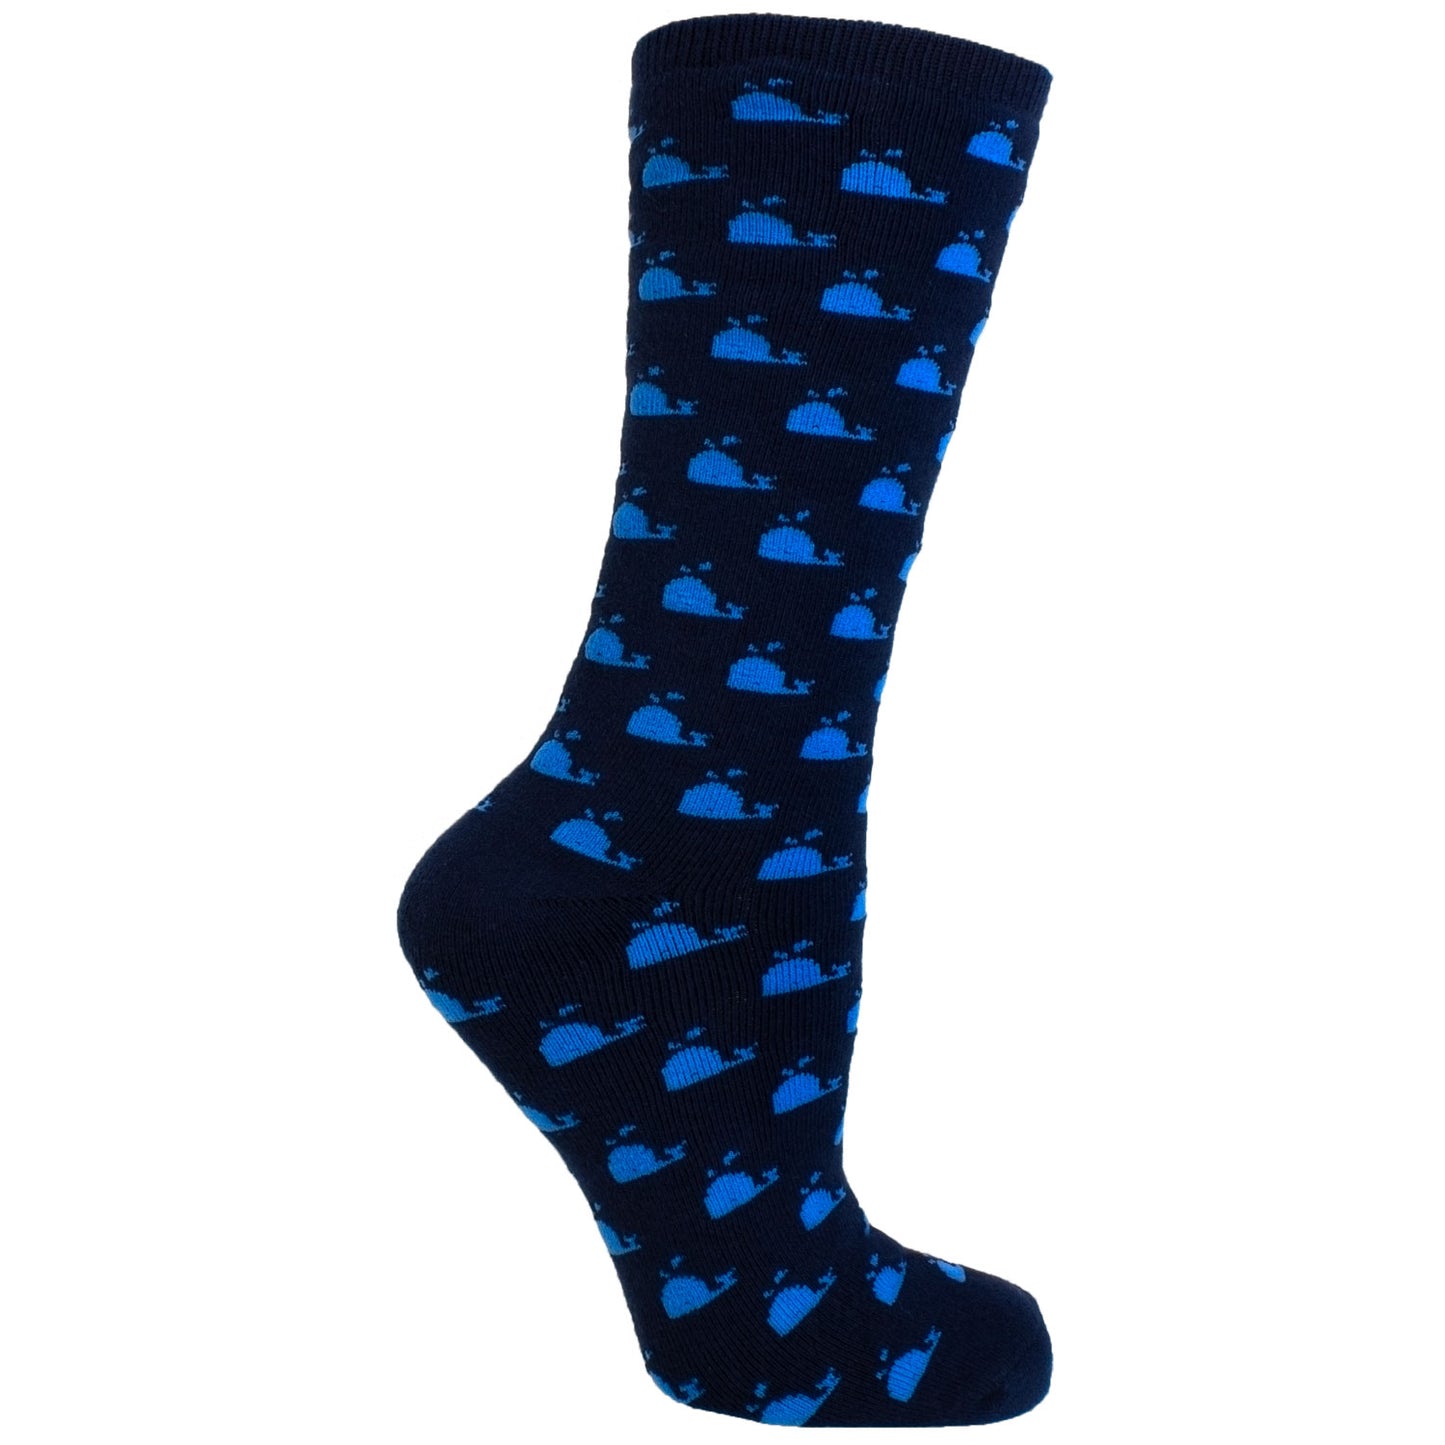 Men's Socks Athletic Performance Sport Whale Pattern Mid Calf Crew Socks Blue